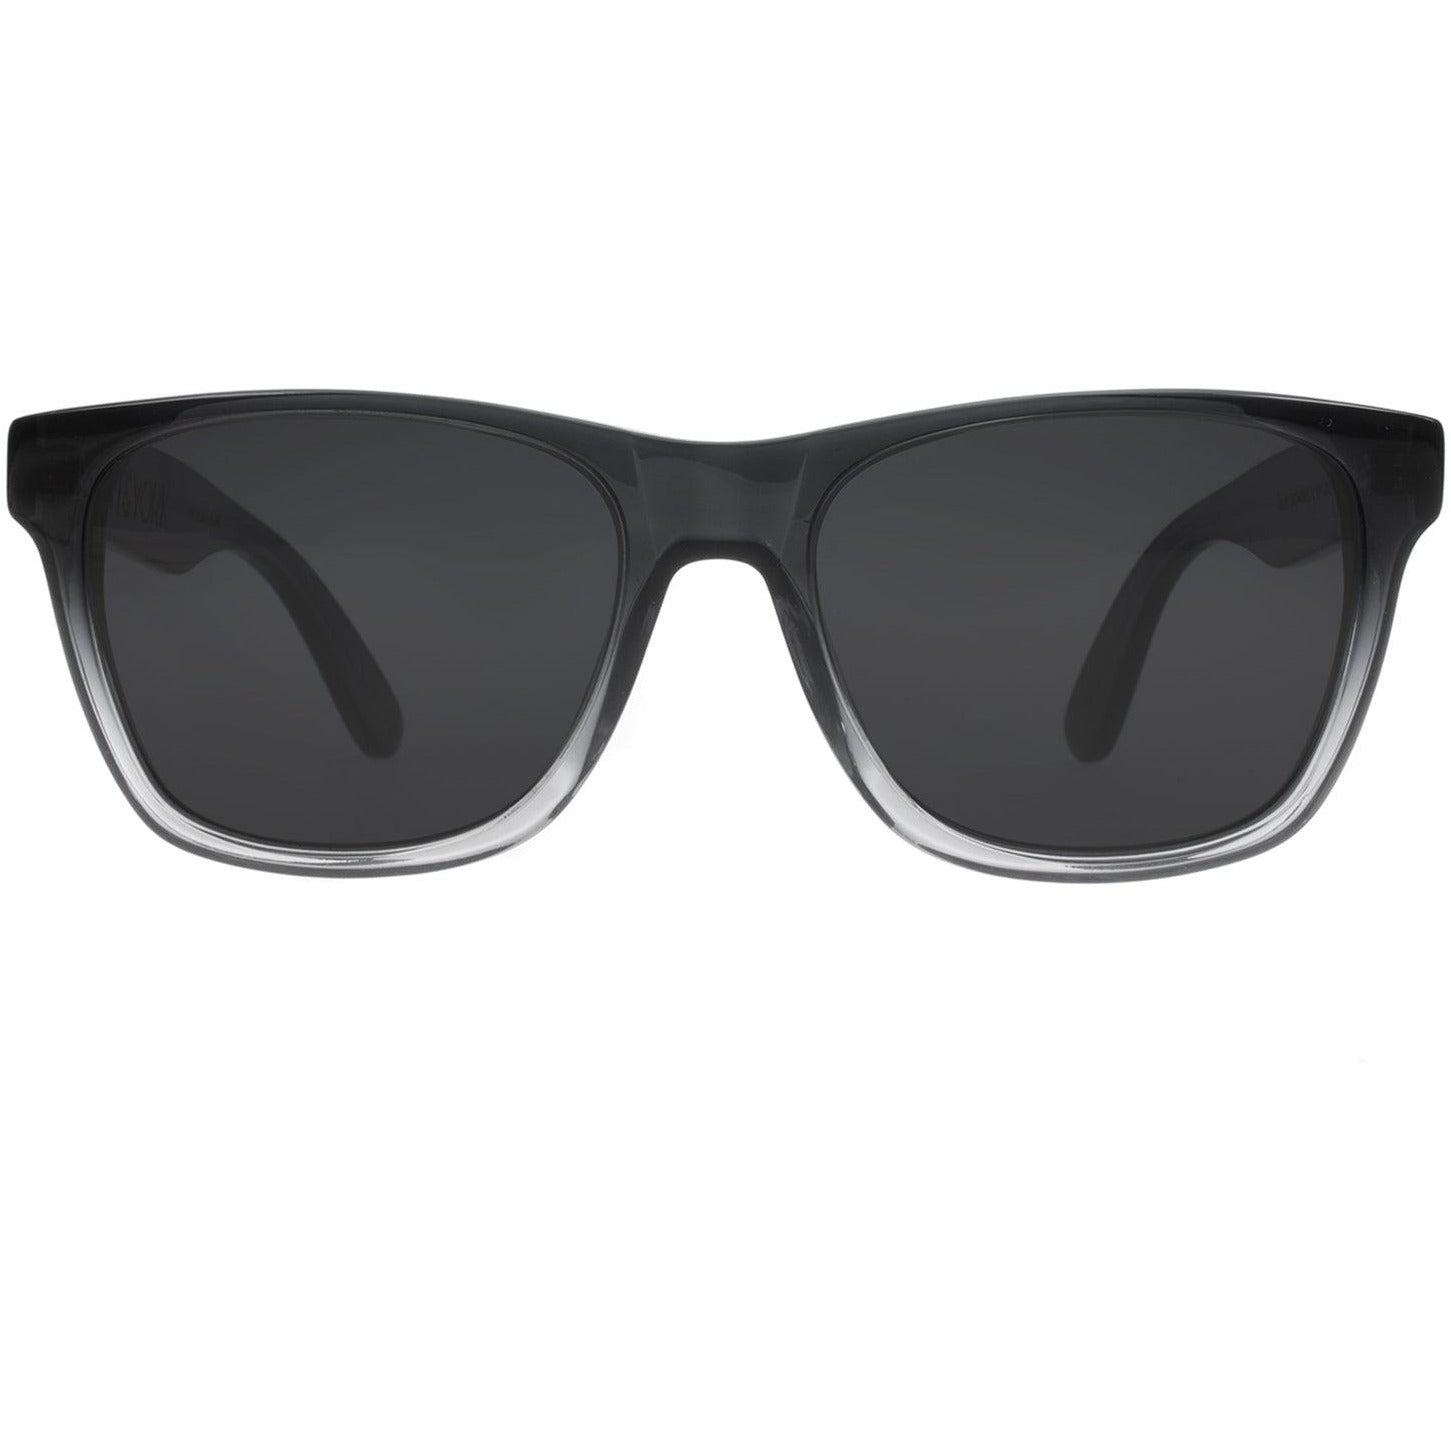 Buy Woggles Ocean Depths Polarized Wayfarers Sunglasses at Amazon.in